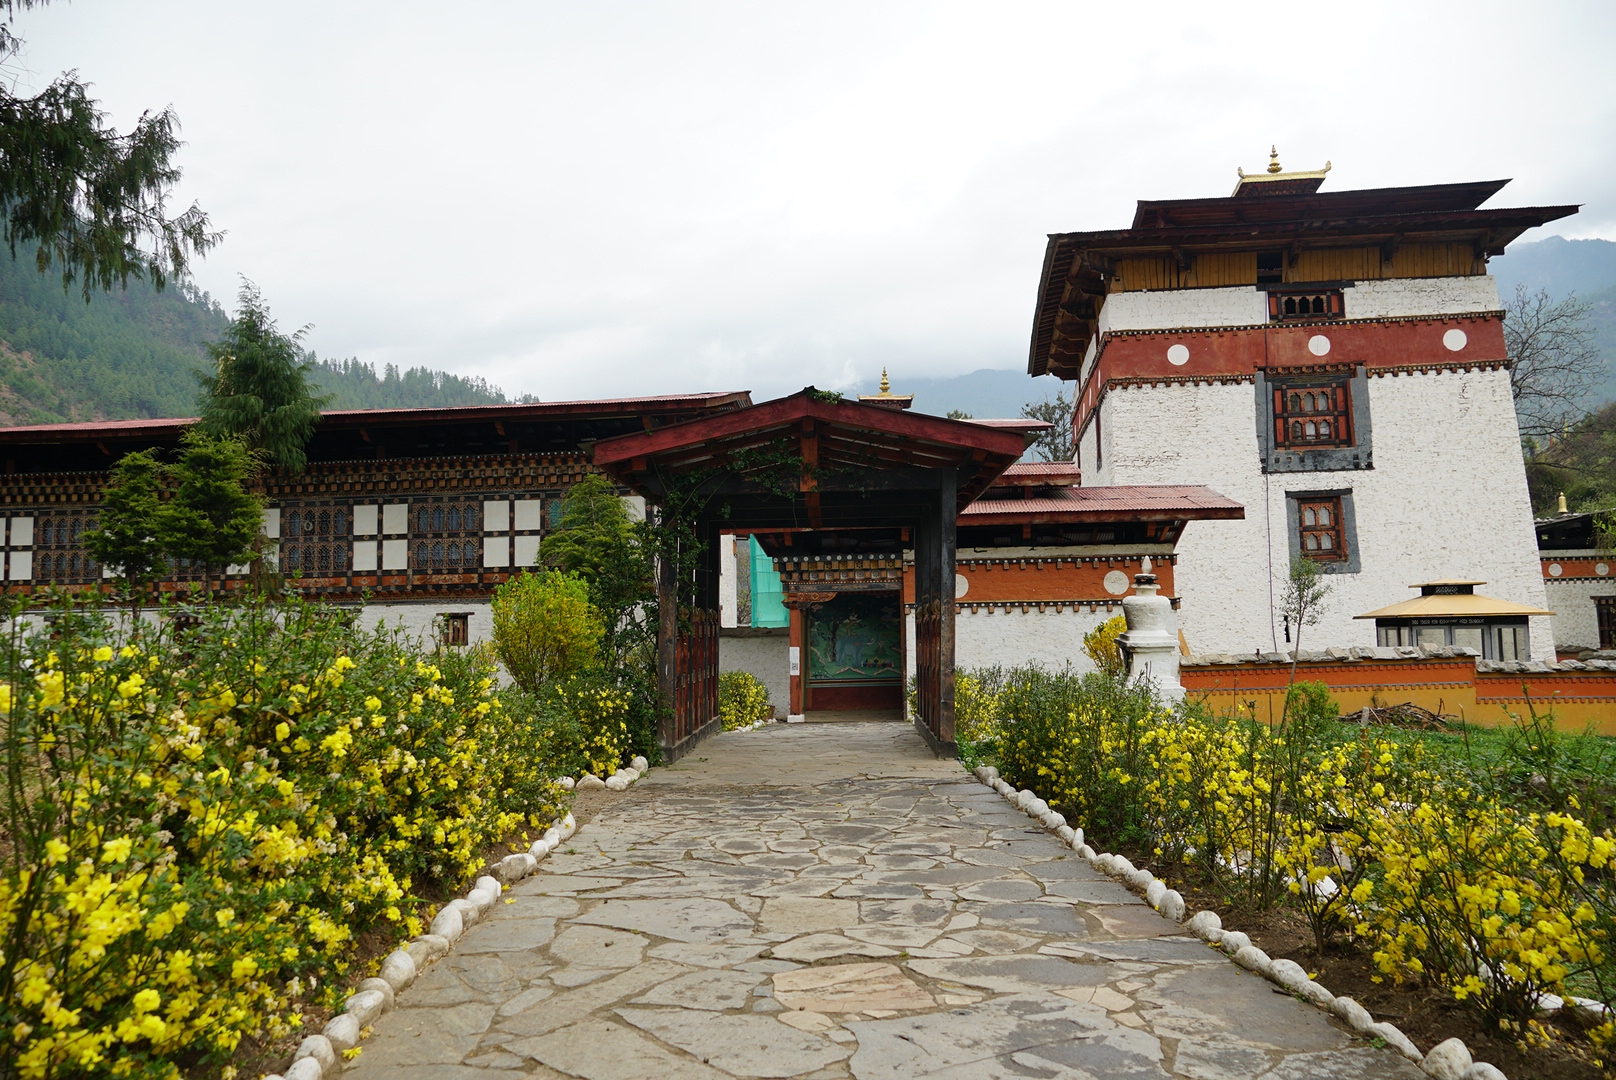 Pangri Zampa Monastery | Things to see in Thimphu 